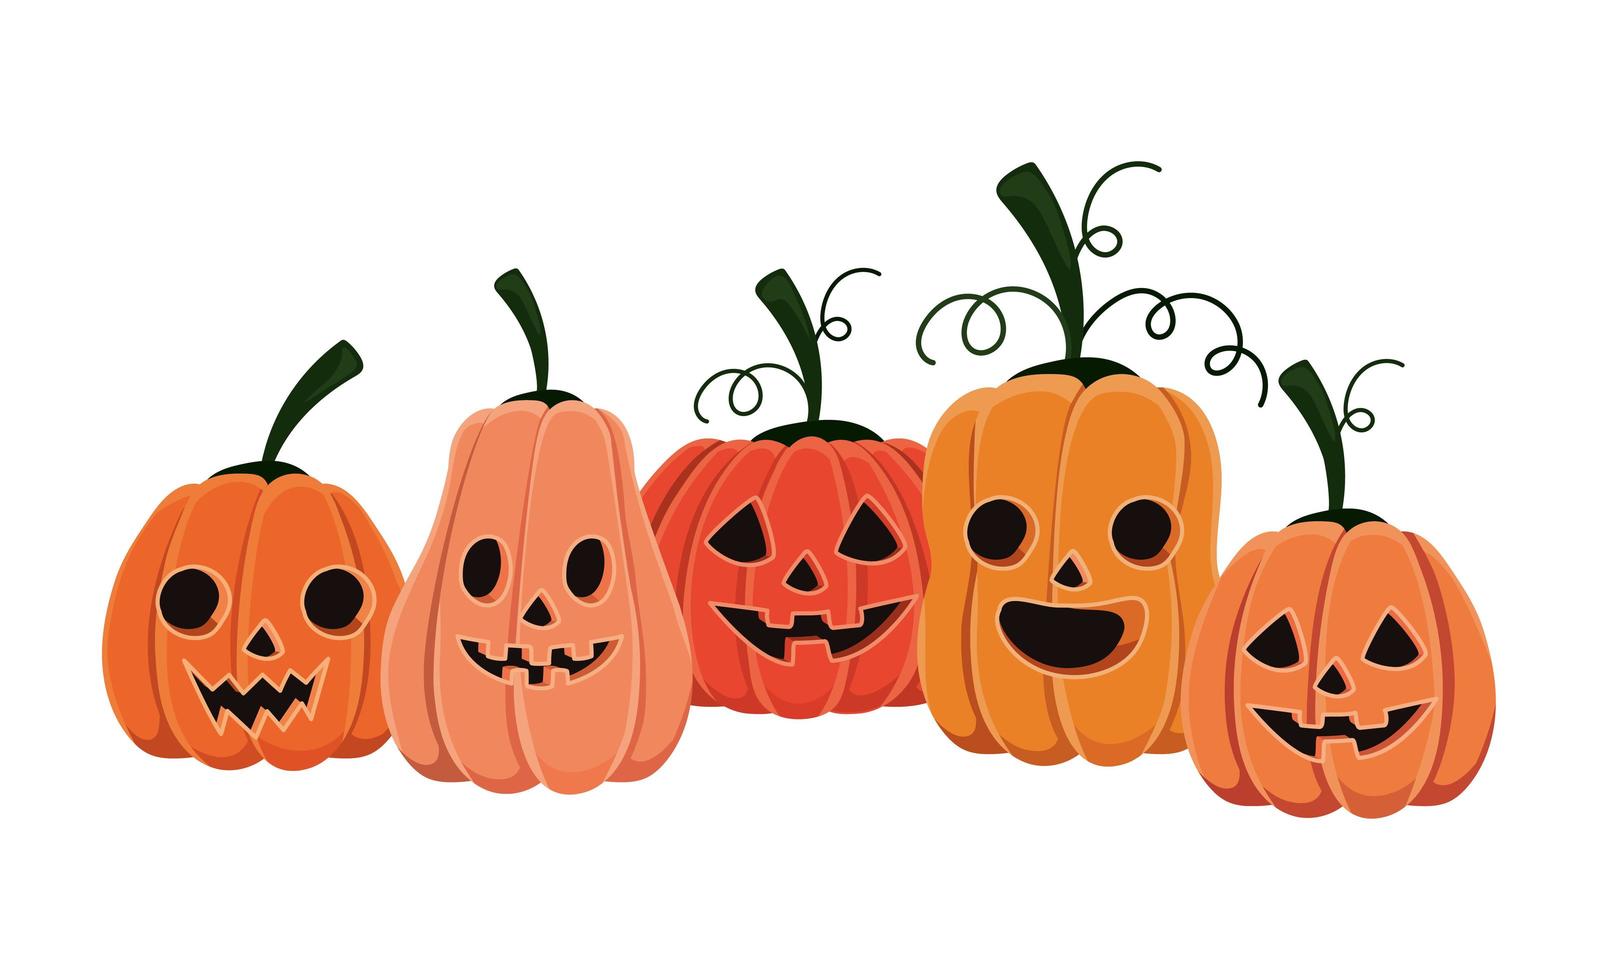 Halloween pumpkins cartoons design vector